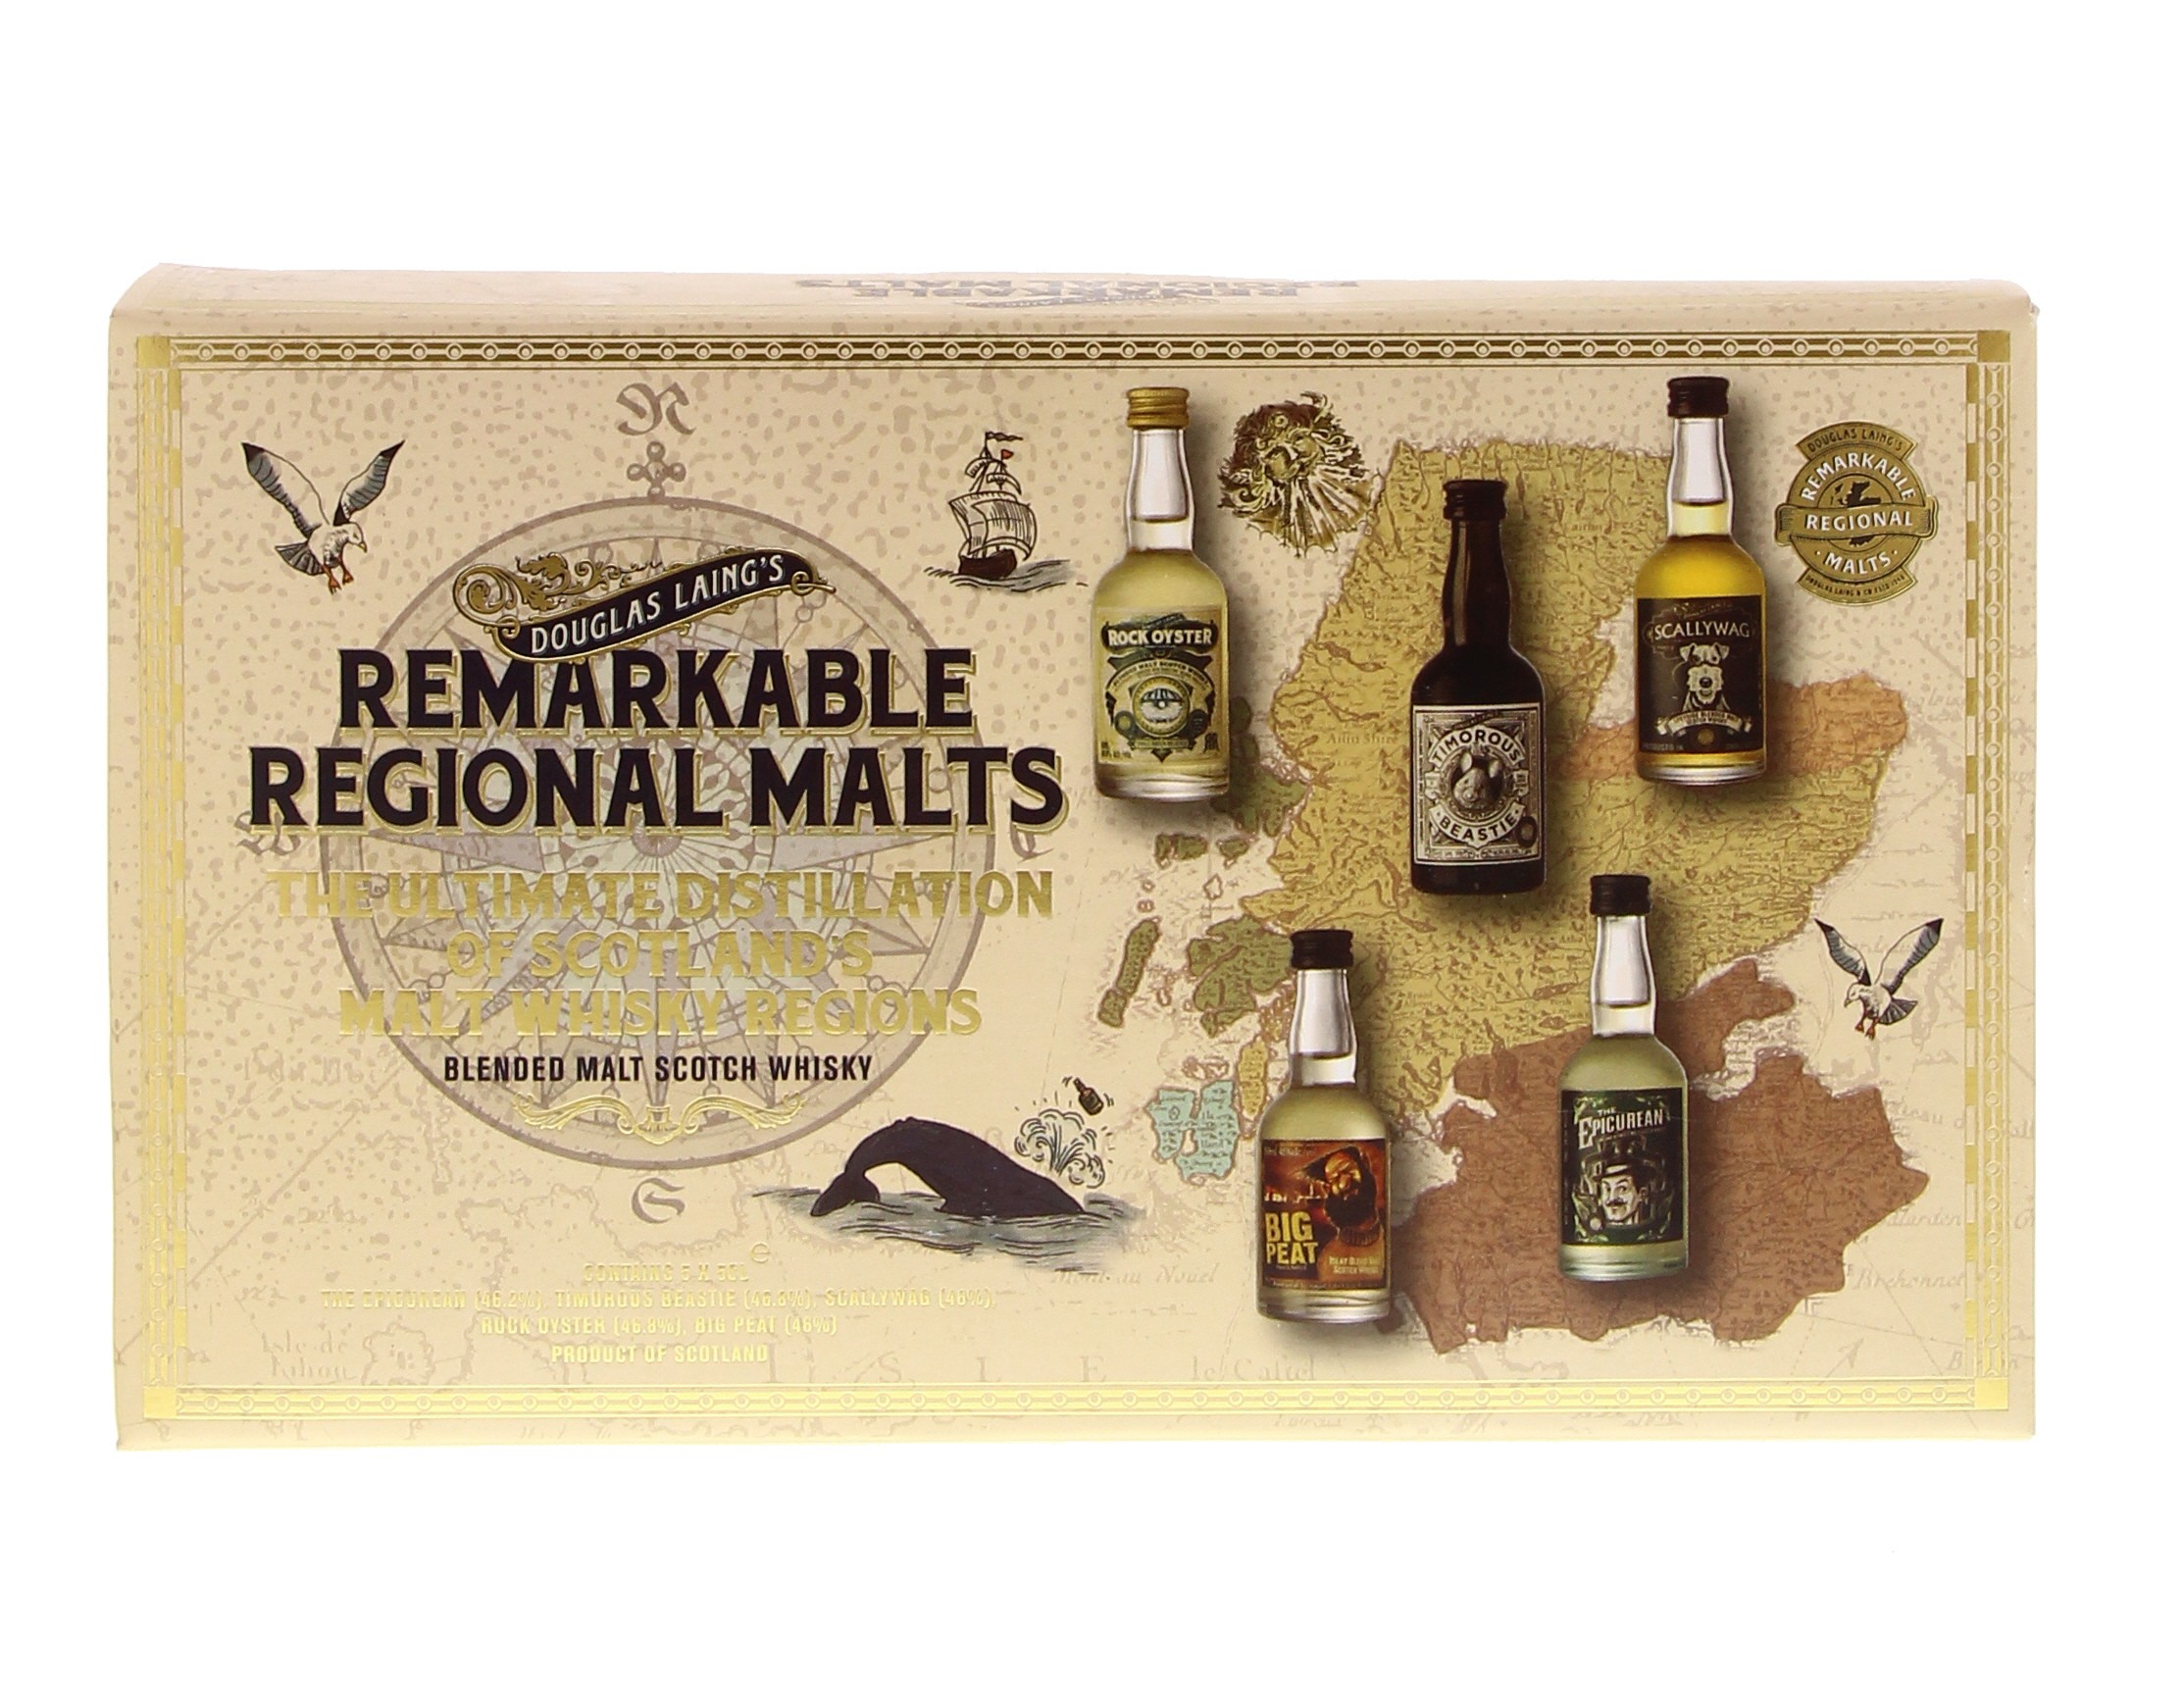 Remarkable Regional Malts 5 x 5 cl (Scallywag, Rock Oyster, Big Peat, Timorous Beastie & Epicurean) 46.4° 0.25L